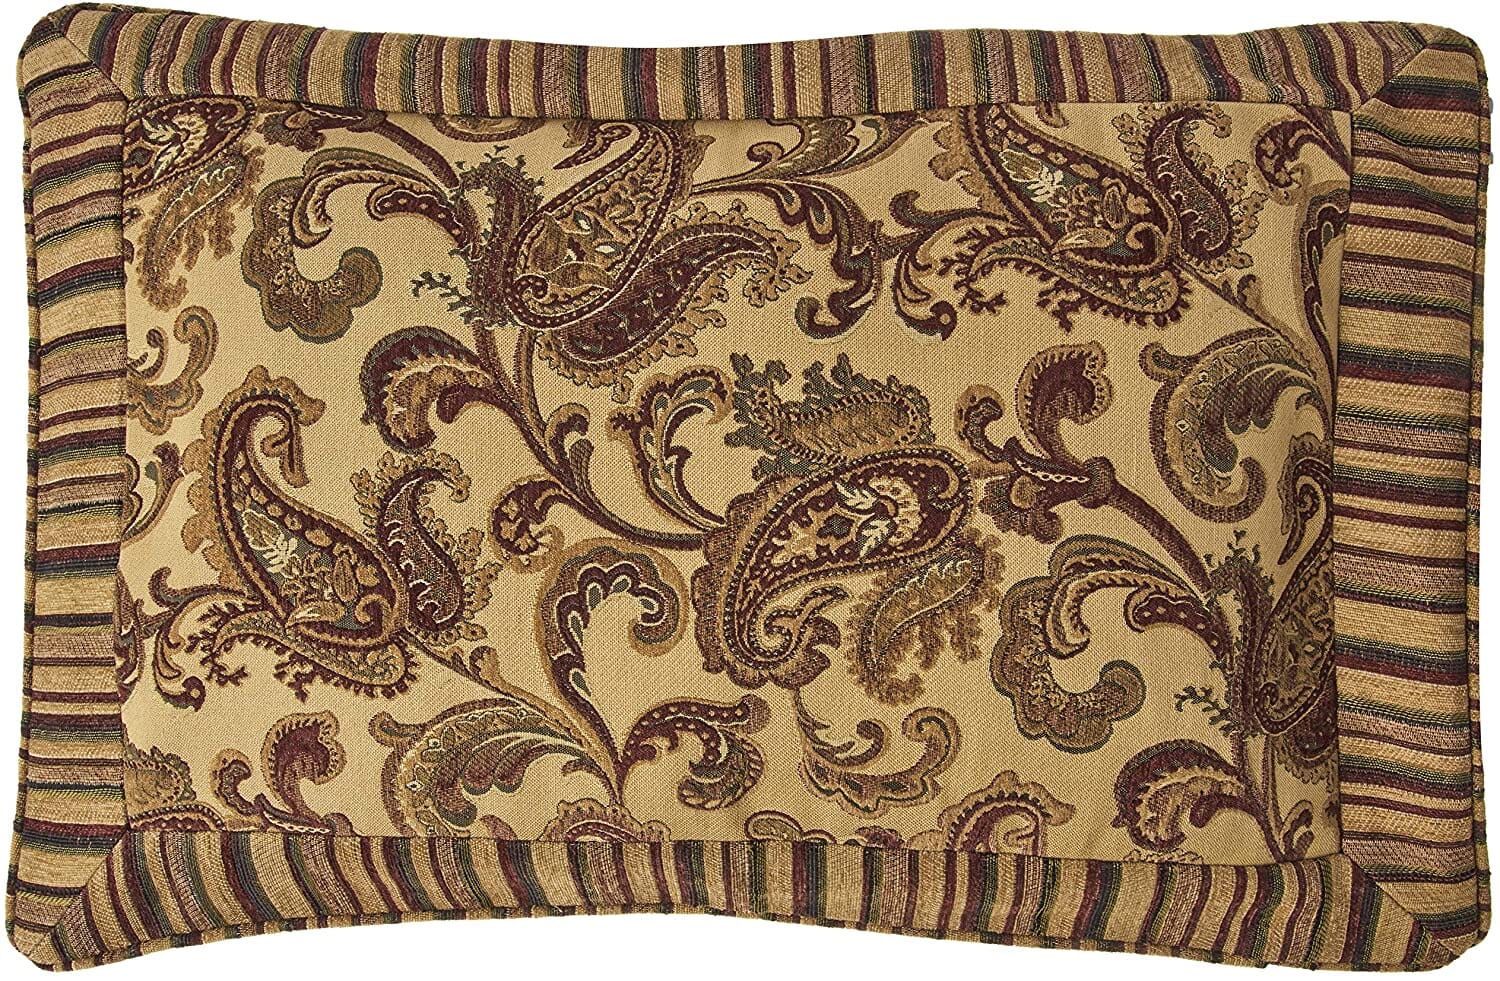 Tache Chenille Elegant Paisley Striped Brown Burgundy Exotic Blooms Comforter Set With Zipper Cover (BM14224) - Tache Home Fashion